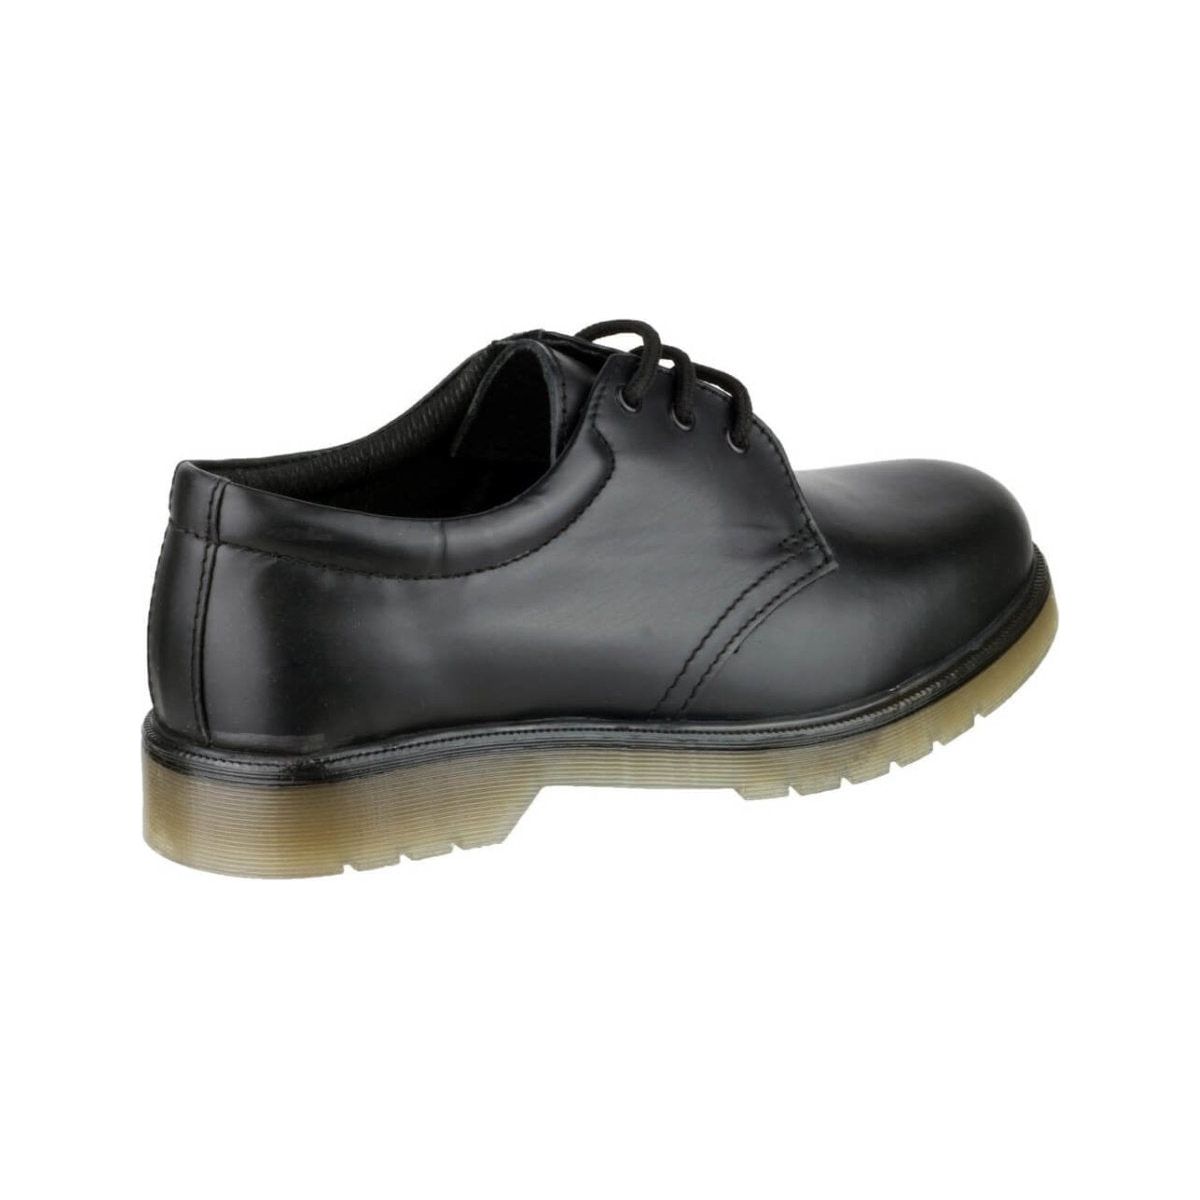 Amblers Aldershot Leather Gibson Boots Womens - workweargurus.com